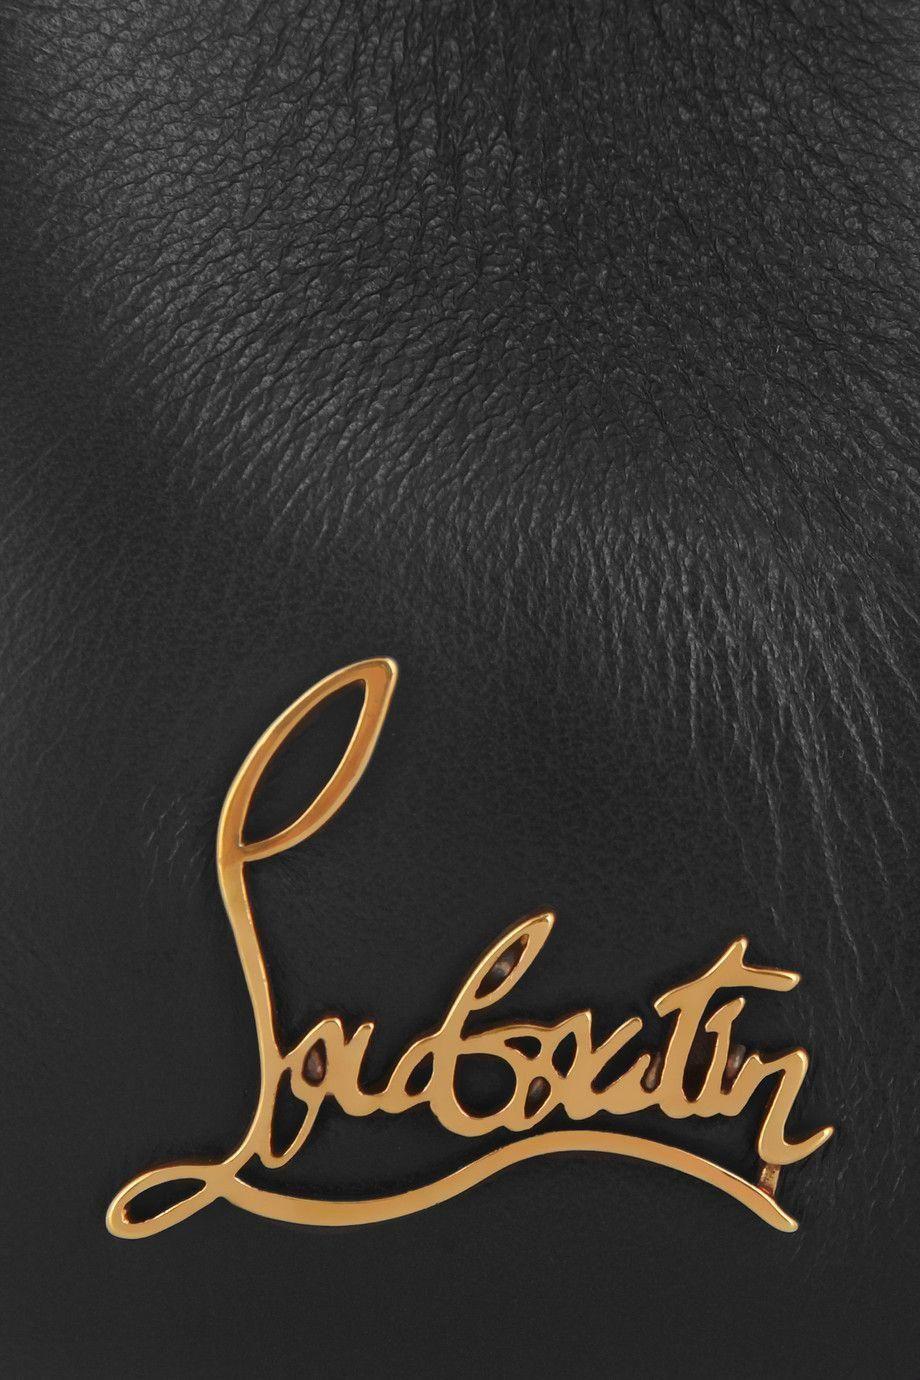 Gold Christian Louboutin Logo - Christian Louboutin #ChristianLouboutin | Christian Louboutin in ...